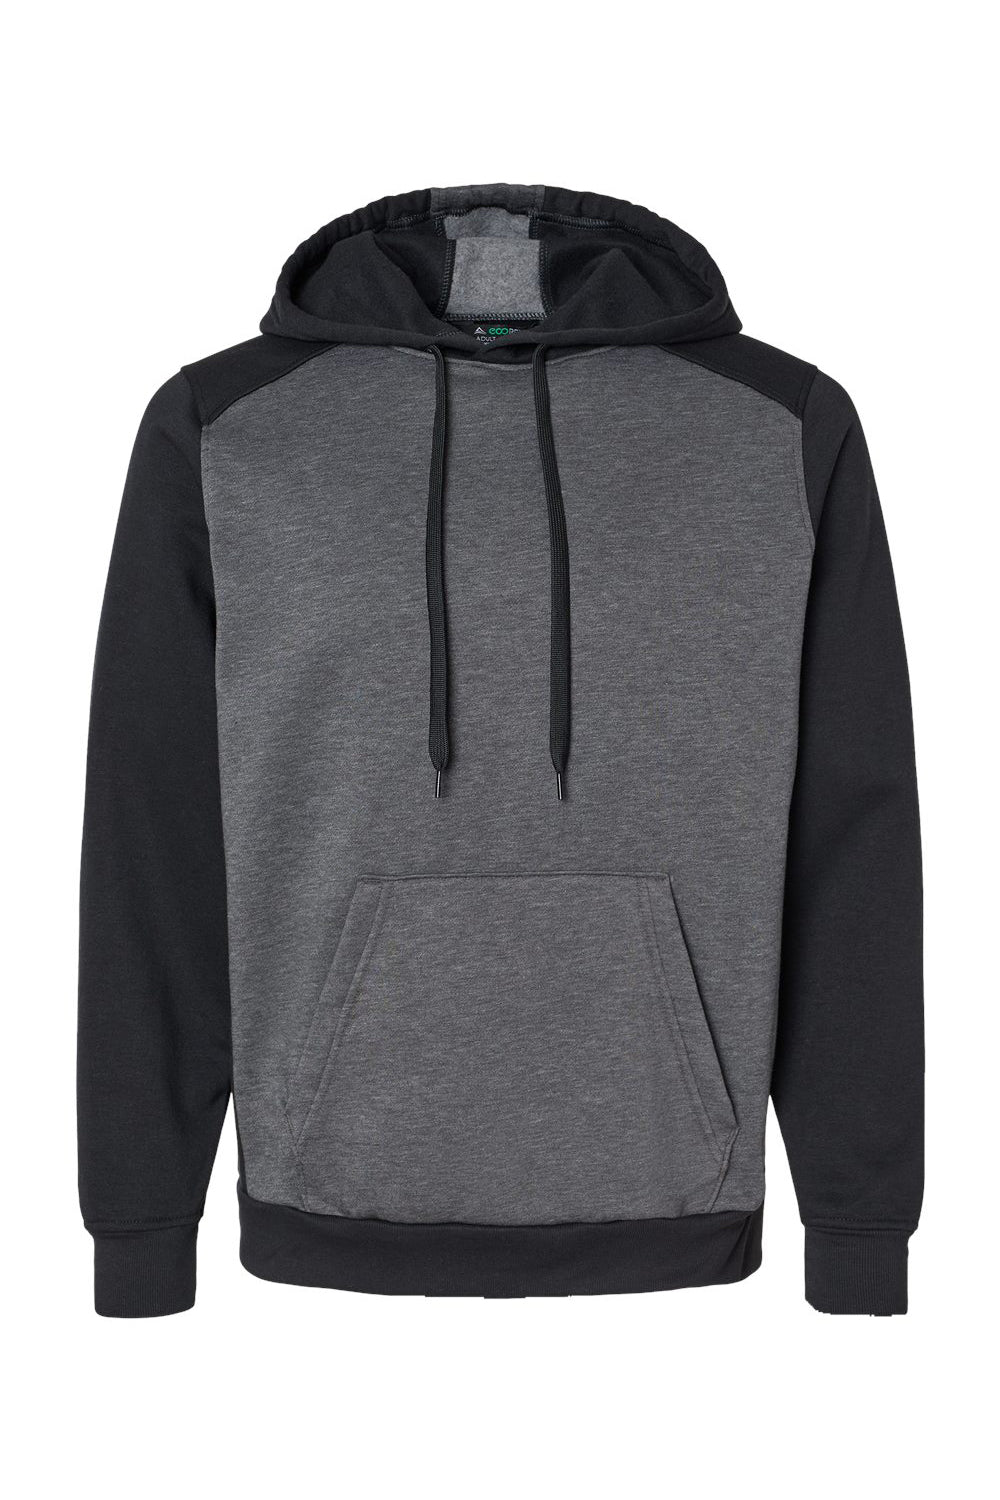 Augusta Sportswear 6865 Mens Eco Revive 3 Season Fleece Hooded Sweatshirt Hoodie Heather Carbon Grey/Black Flat Front